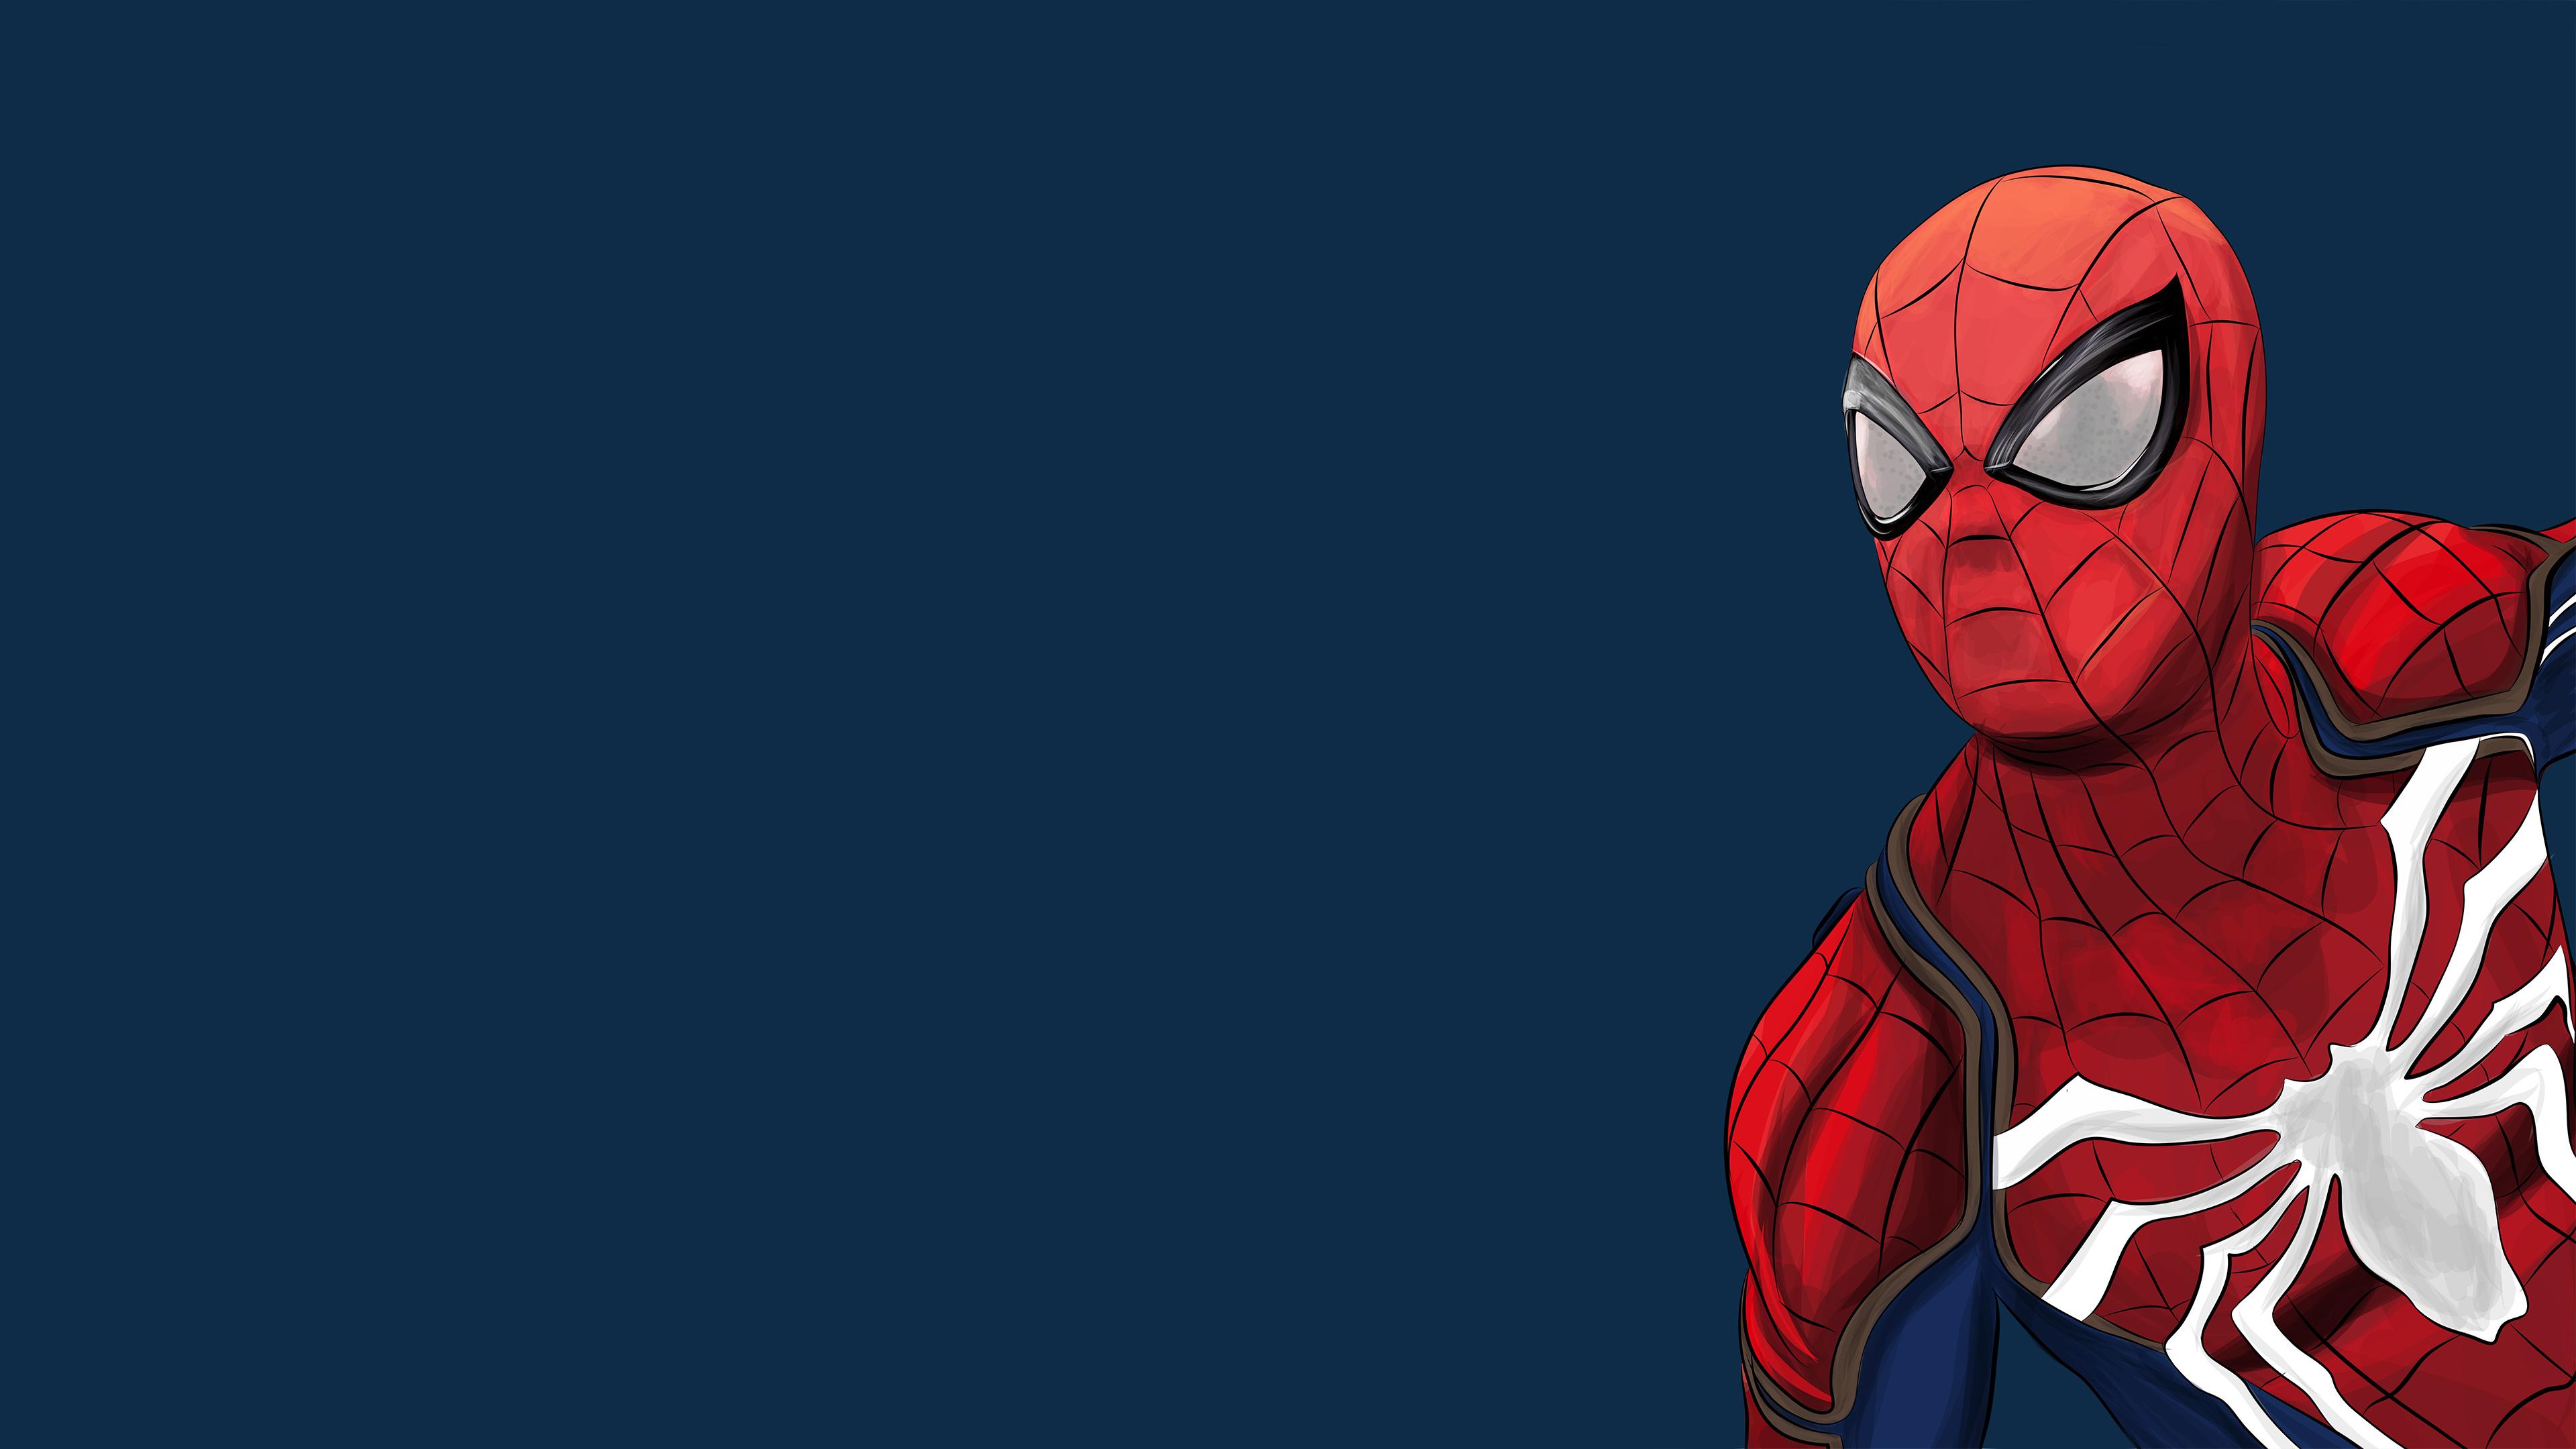 3840 x 2160 · jpeg - Spiderman Ps4 Artwork 4k 2018, HD Superheroes, 4k Wallpapers, Images ...